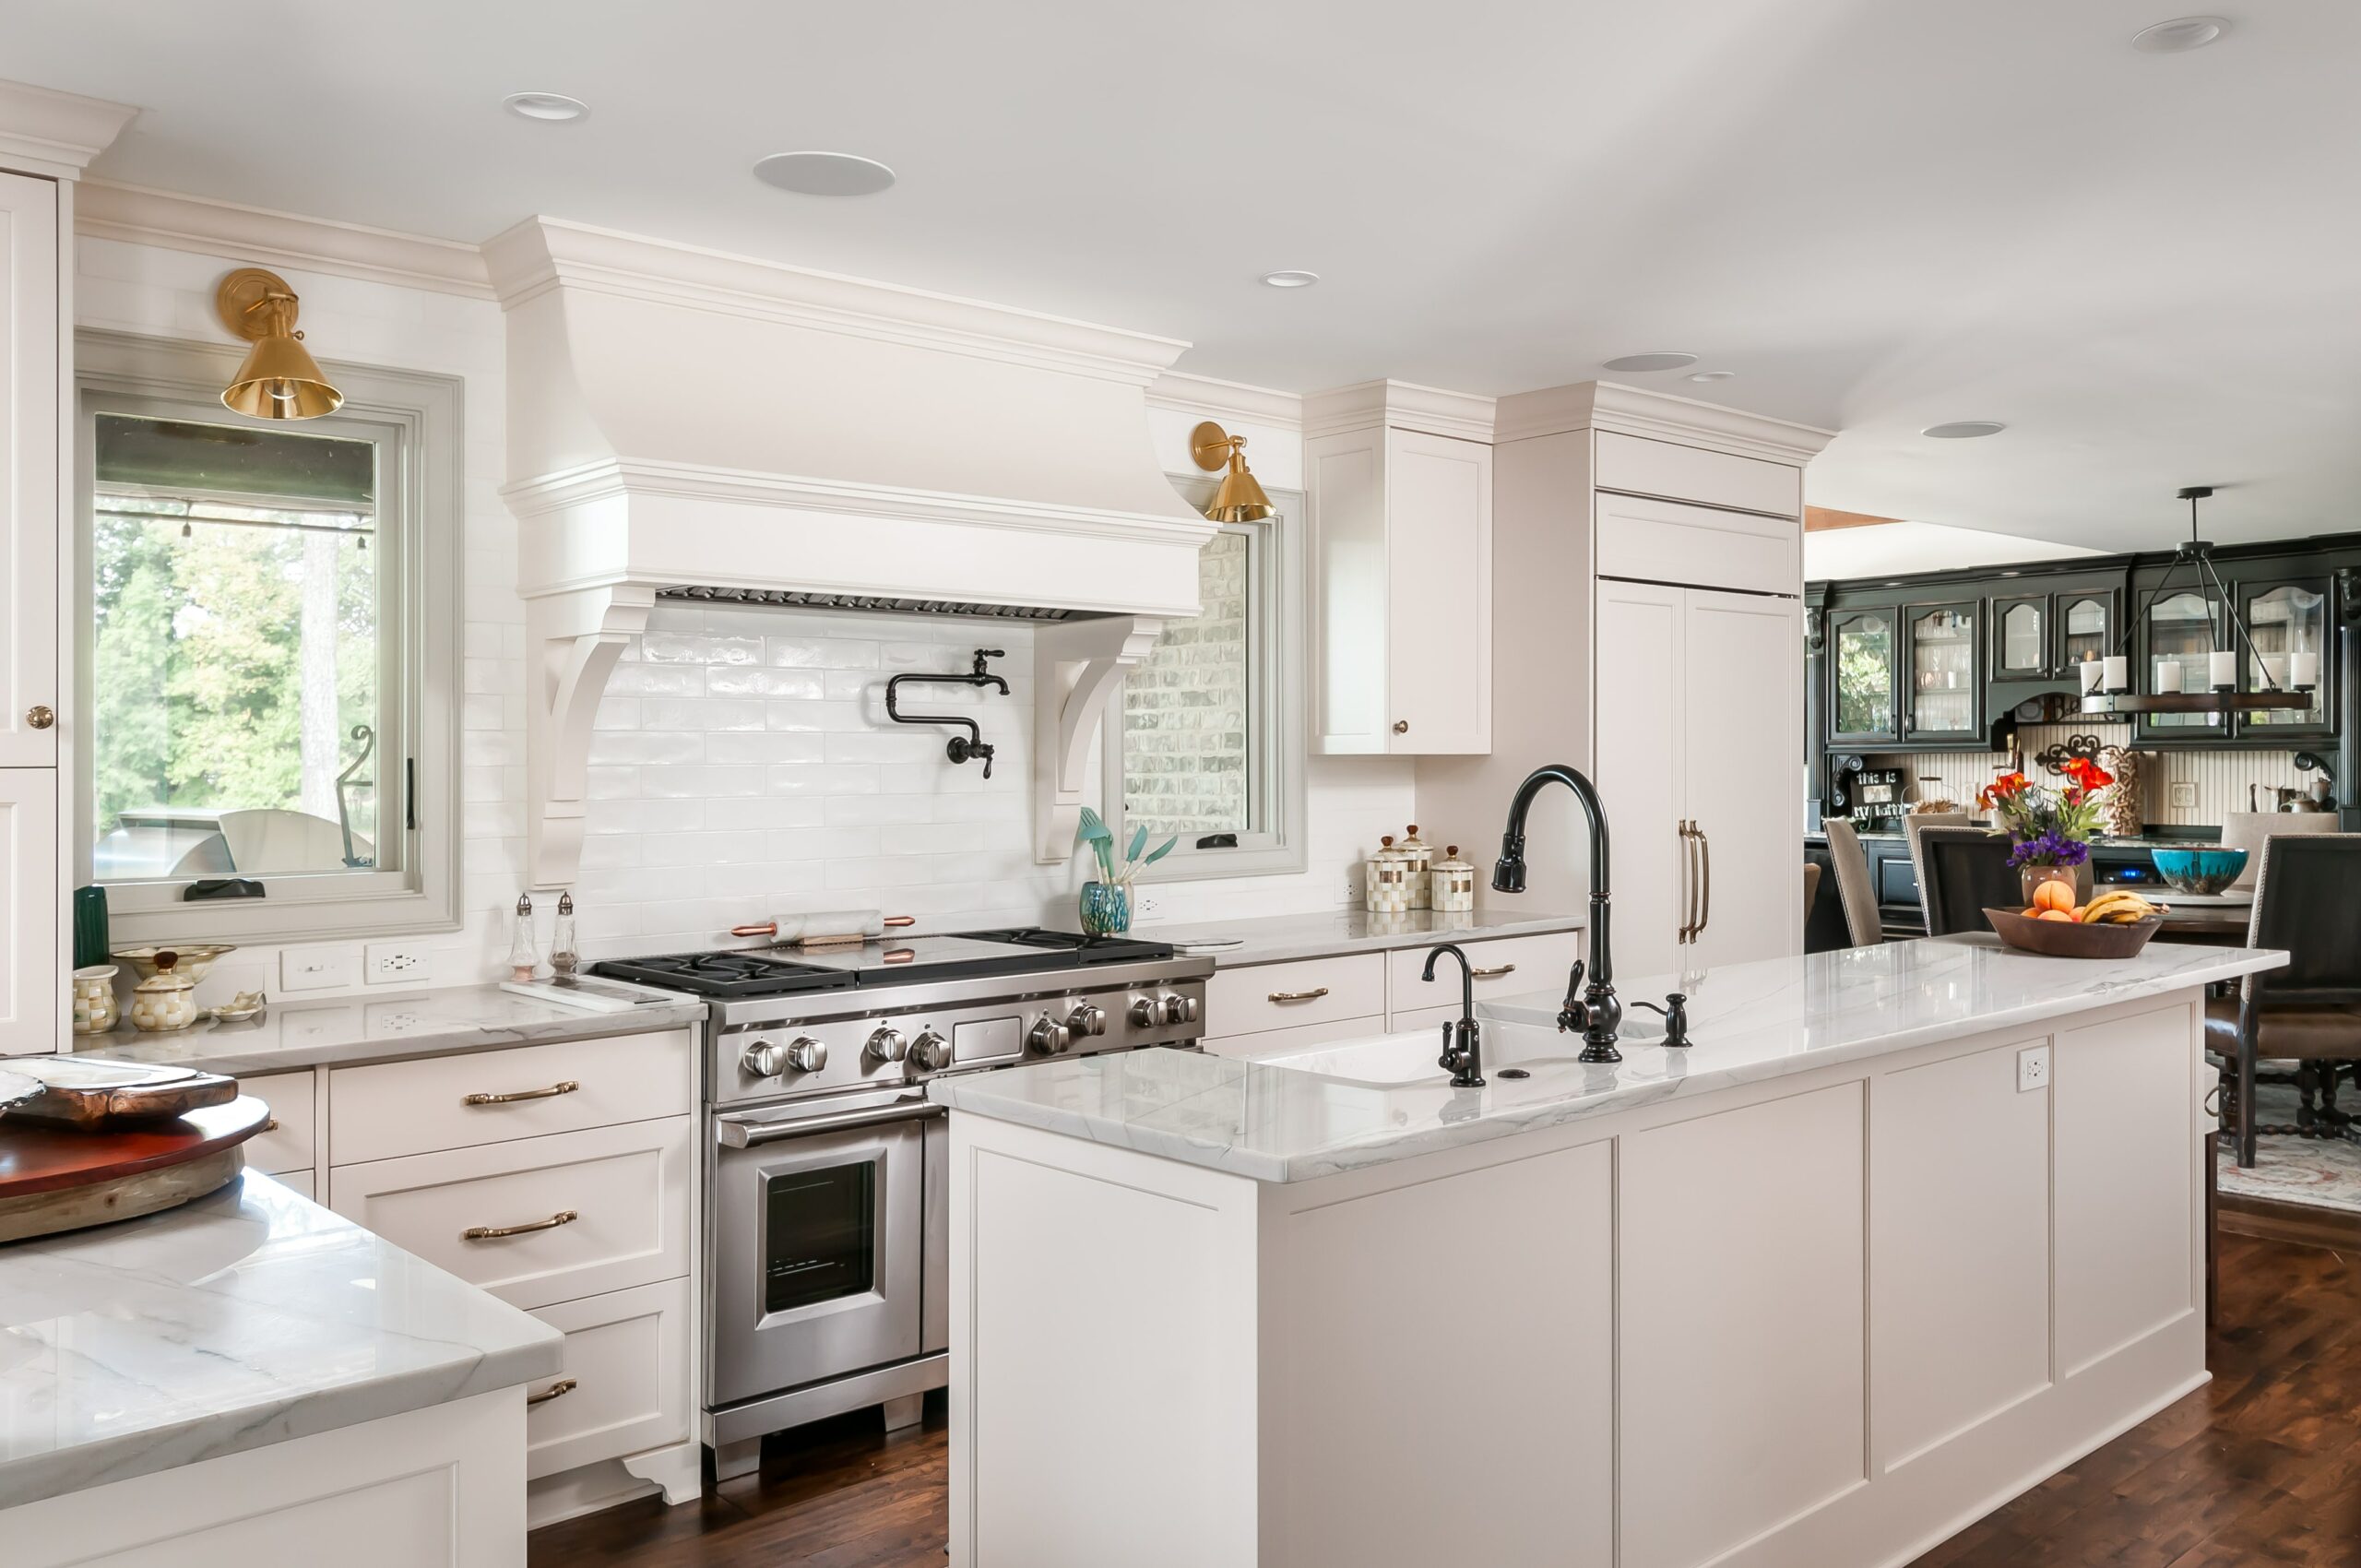 Bright white kitchen design with stainless steel appliances